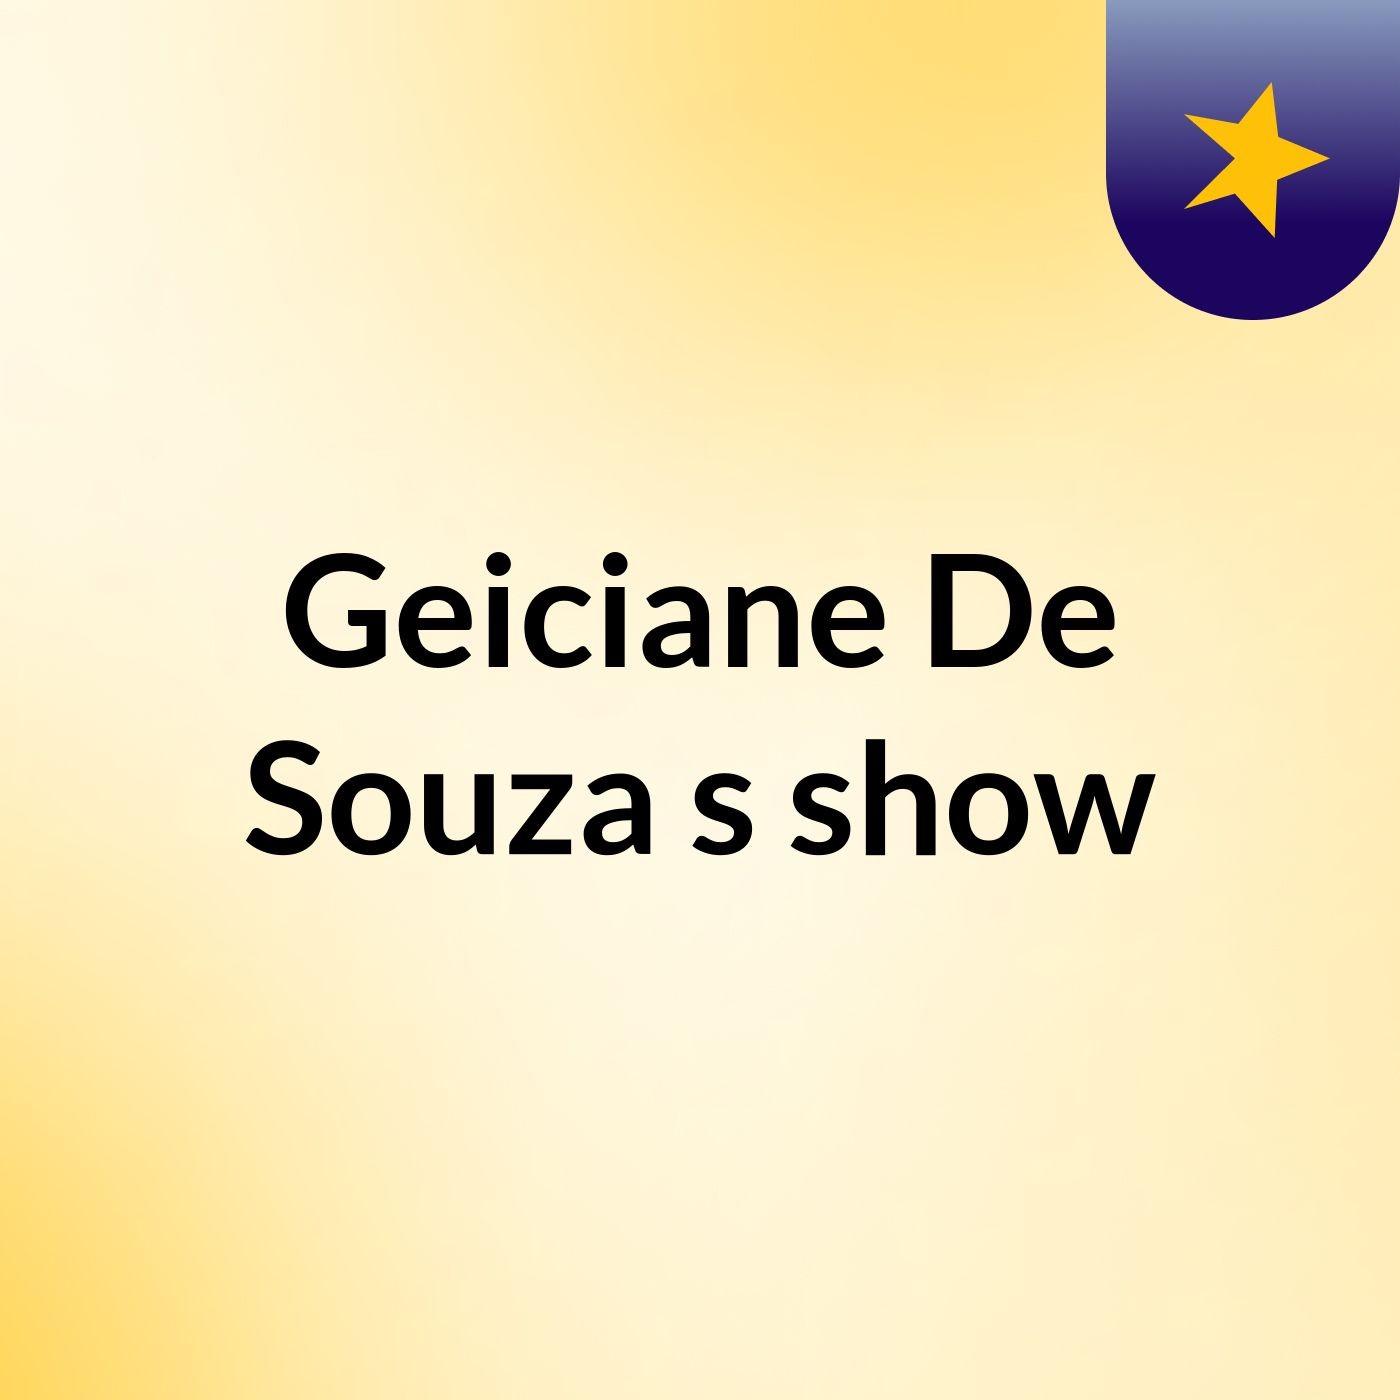 Geiciane De Souza's show